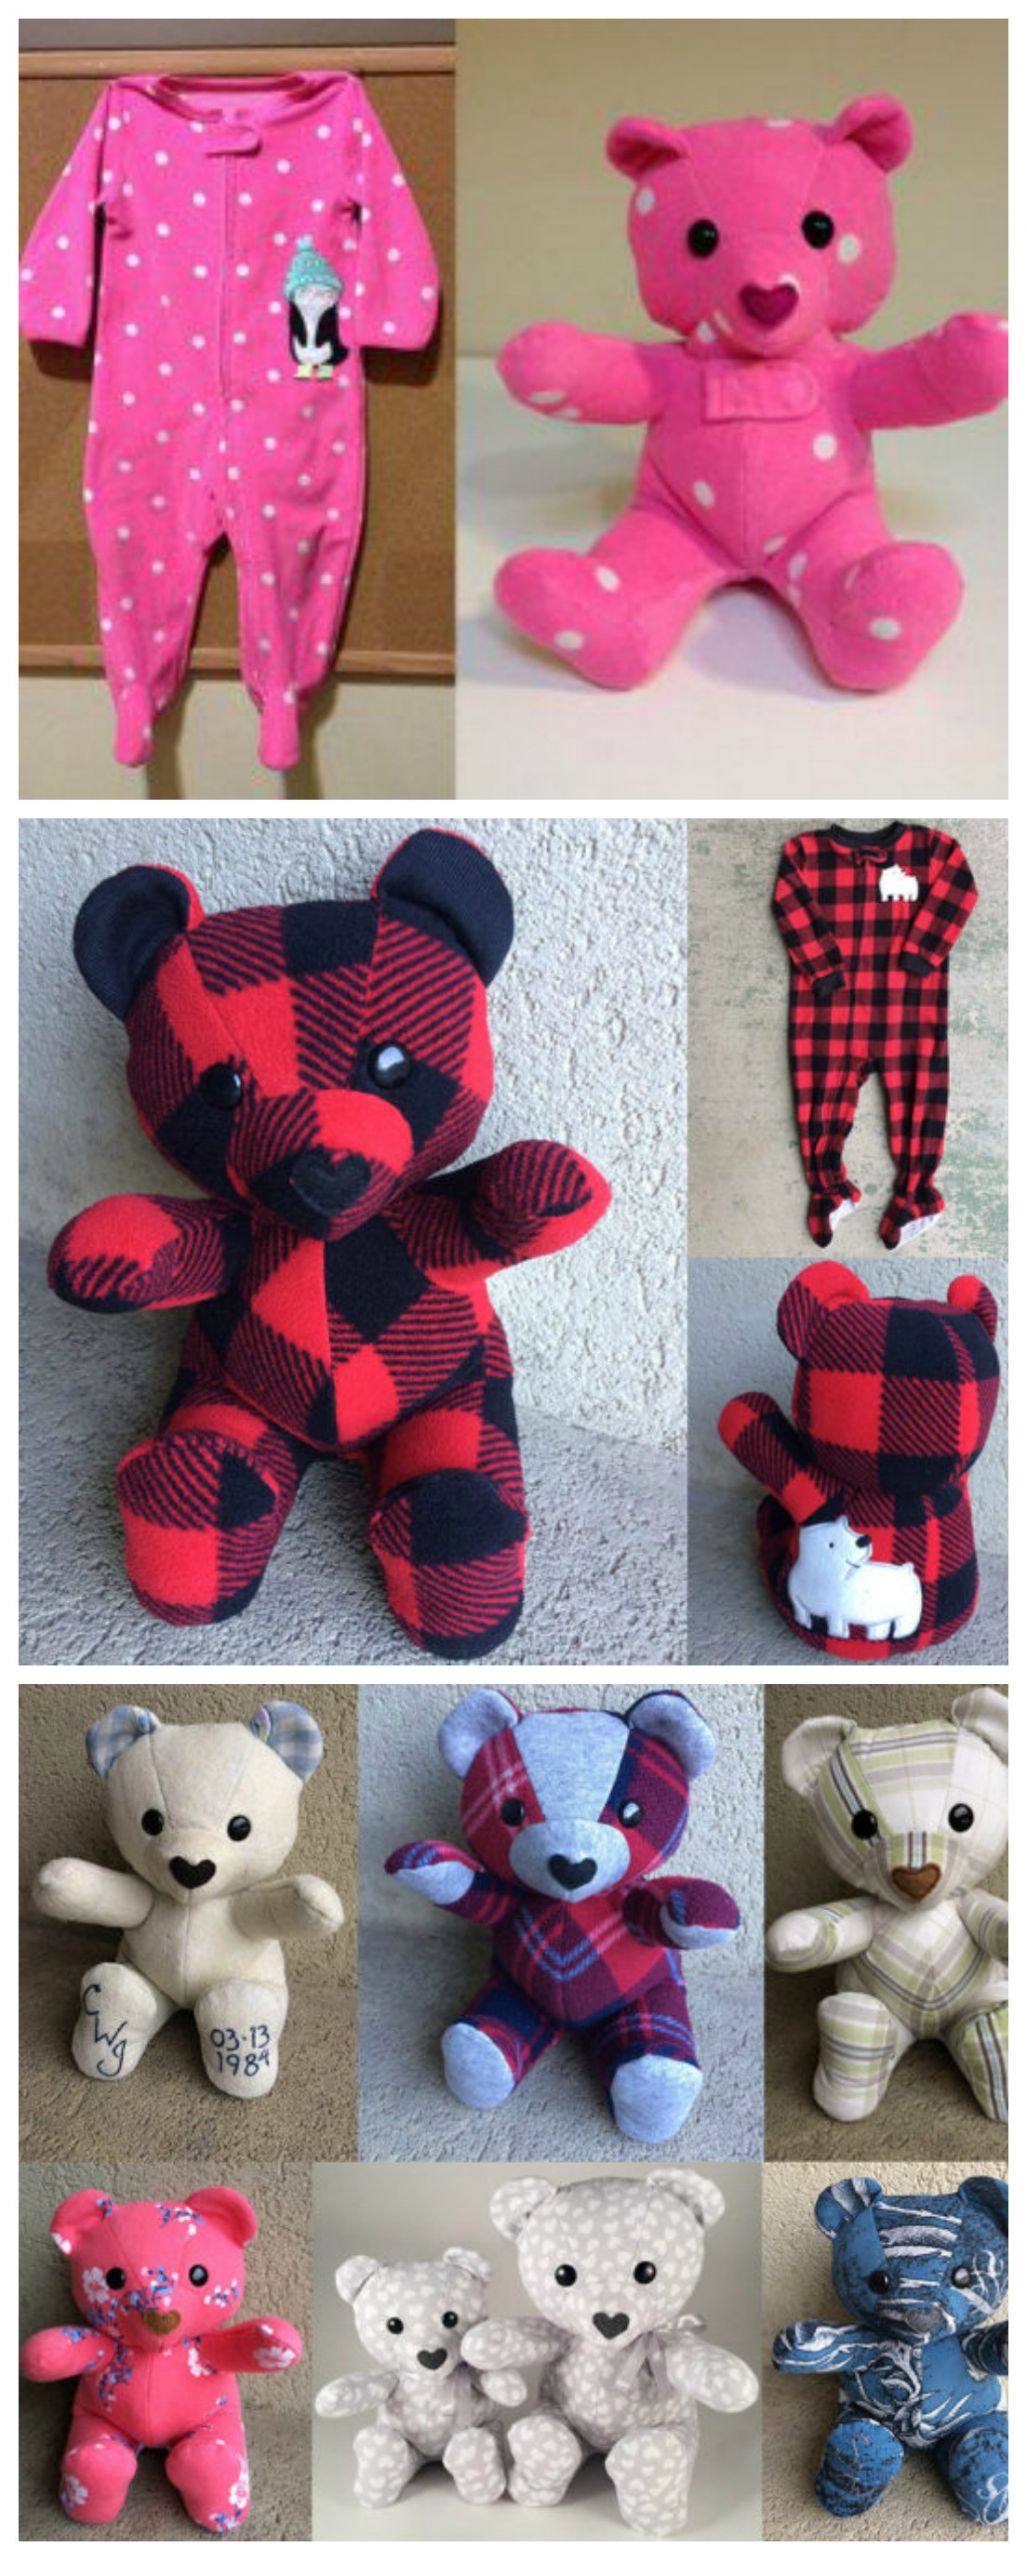 DIY Baby Clothing
 DIY Keepsake Memory Teddy Bear from Baby Clothes DIY 4 EVER